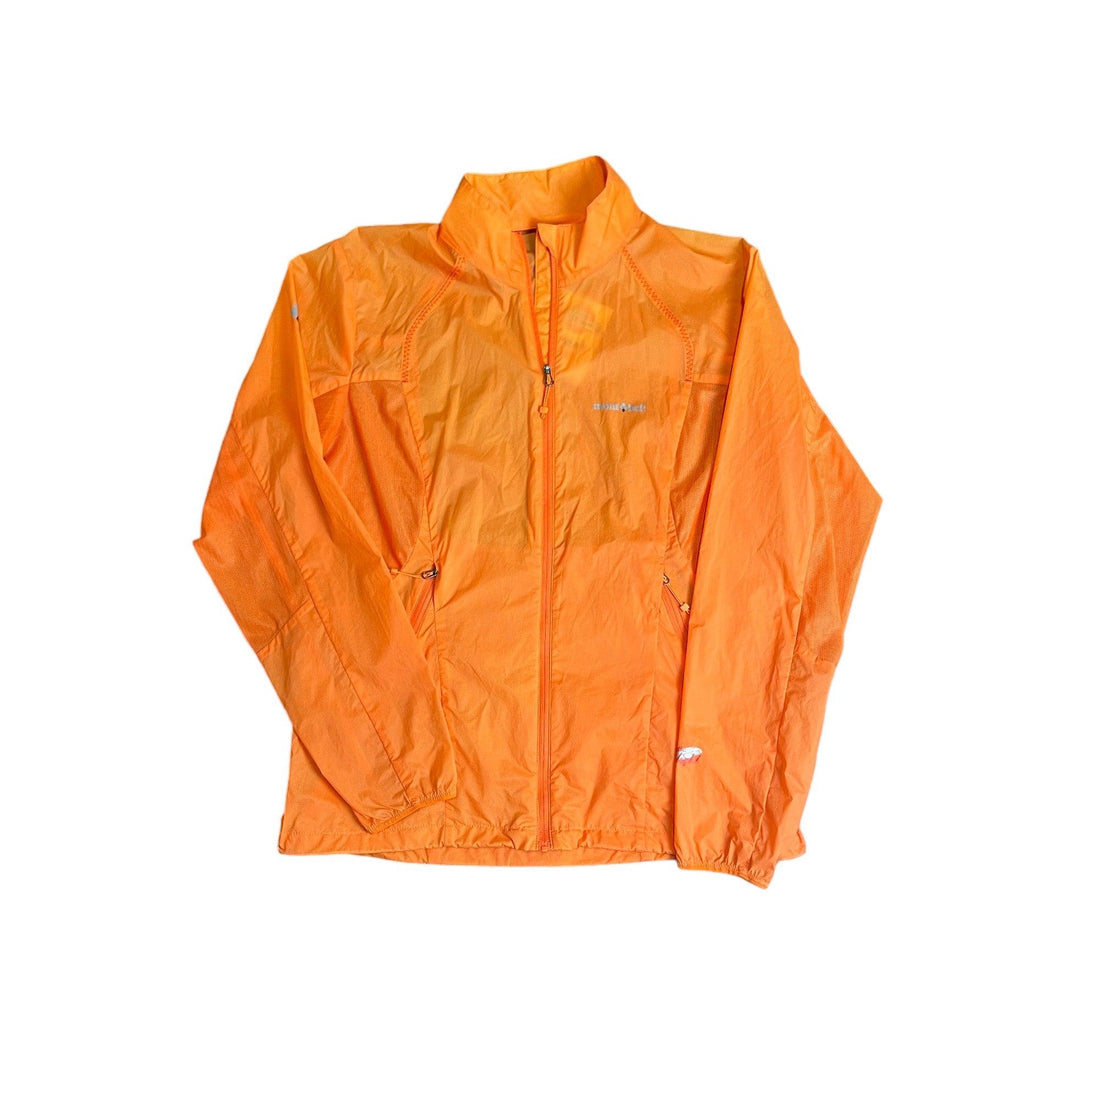 Women's Vintage Orange Montbell Jacket - Medium - The Streetwear Studio